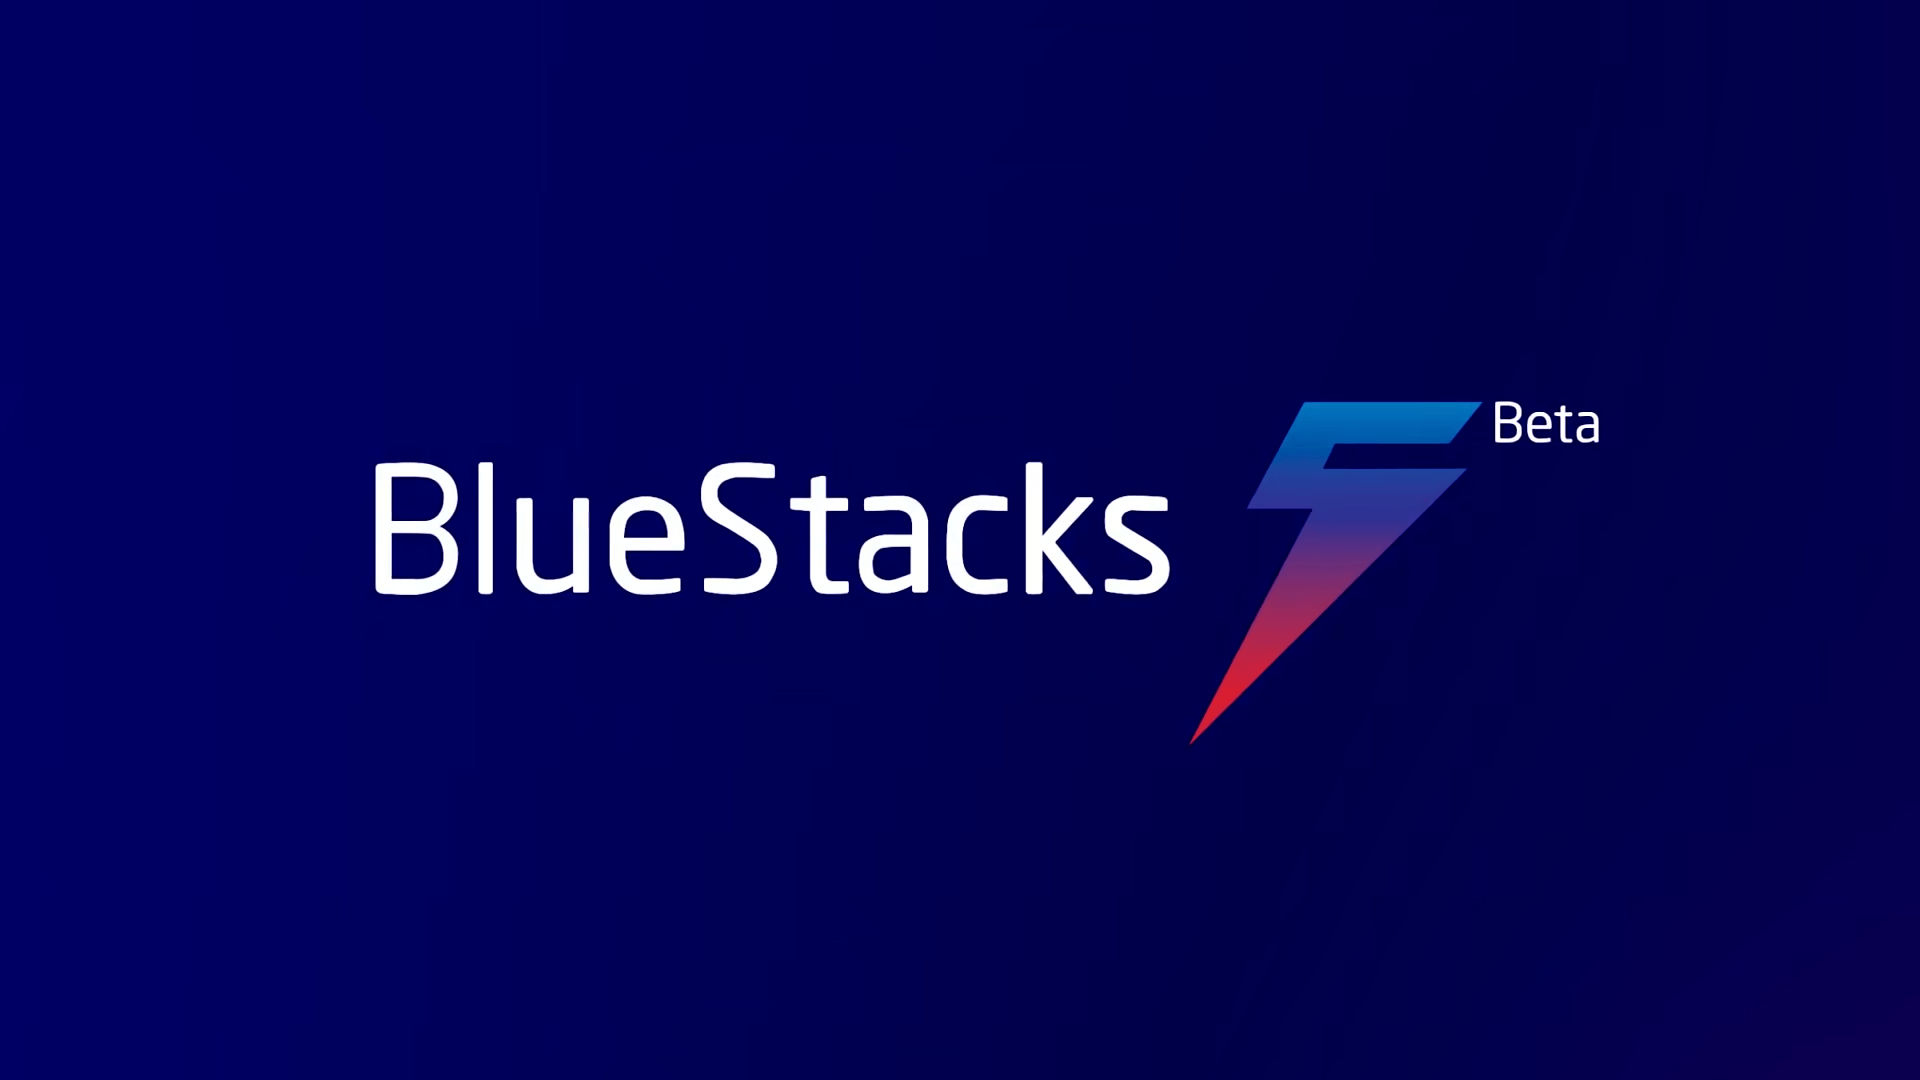 Bluestacks Featured